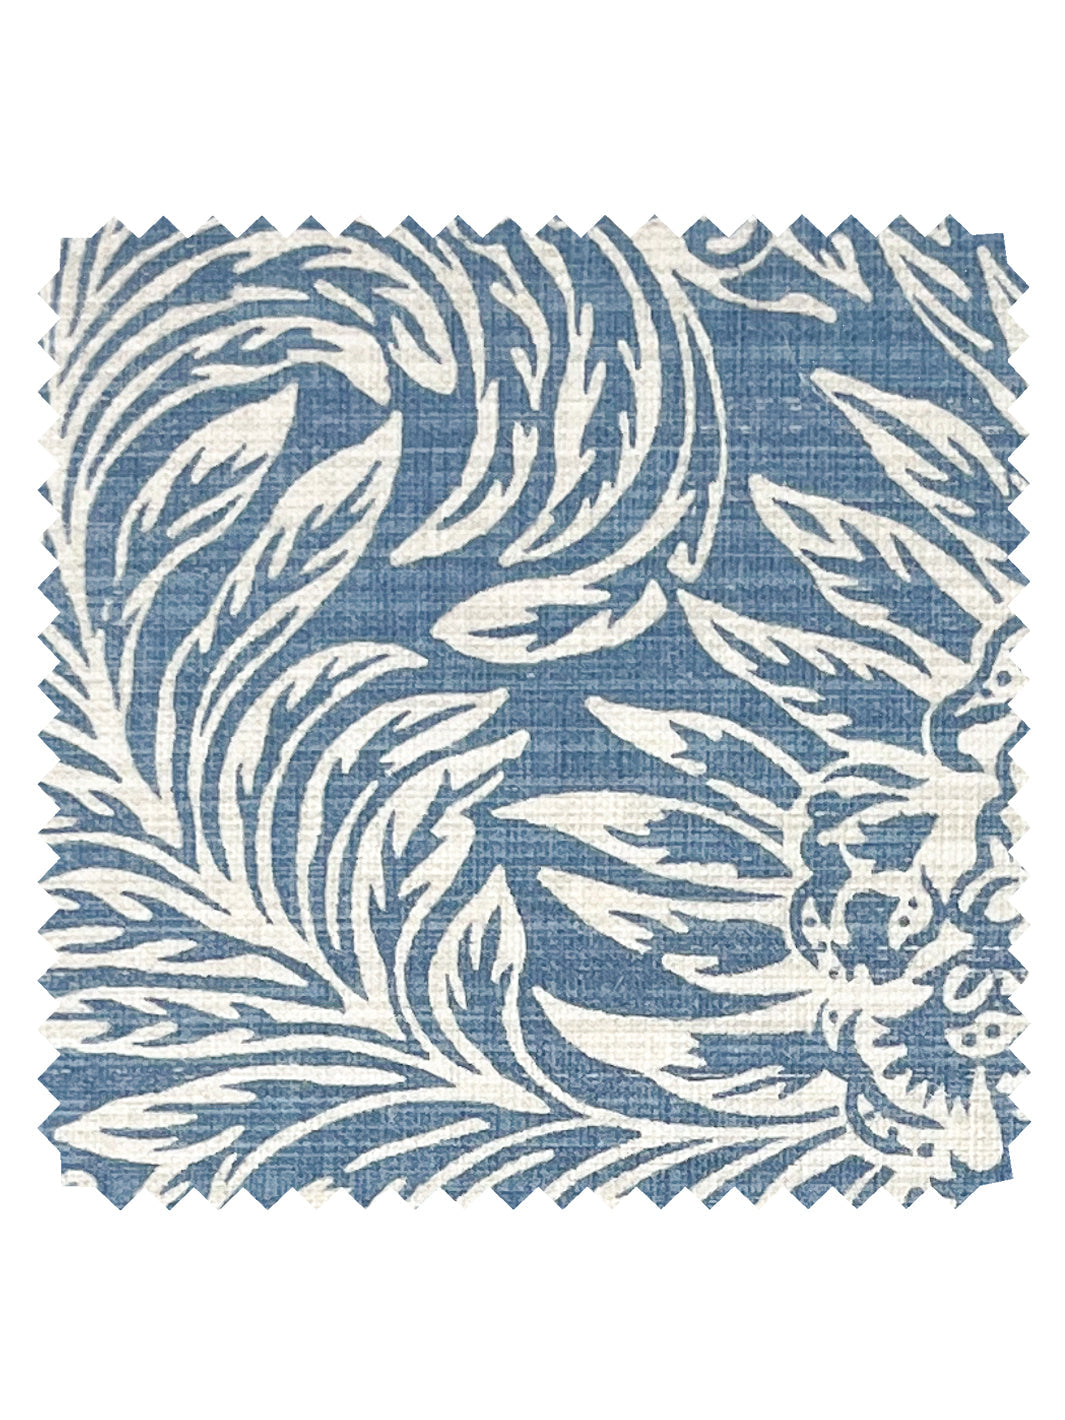 'Herald' Linen Fabric by Nathan Turner - Darker Blue